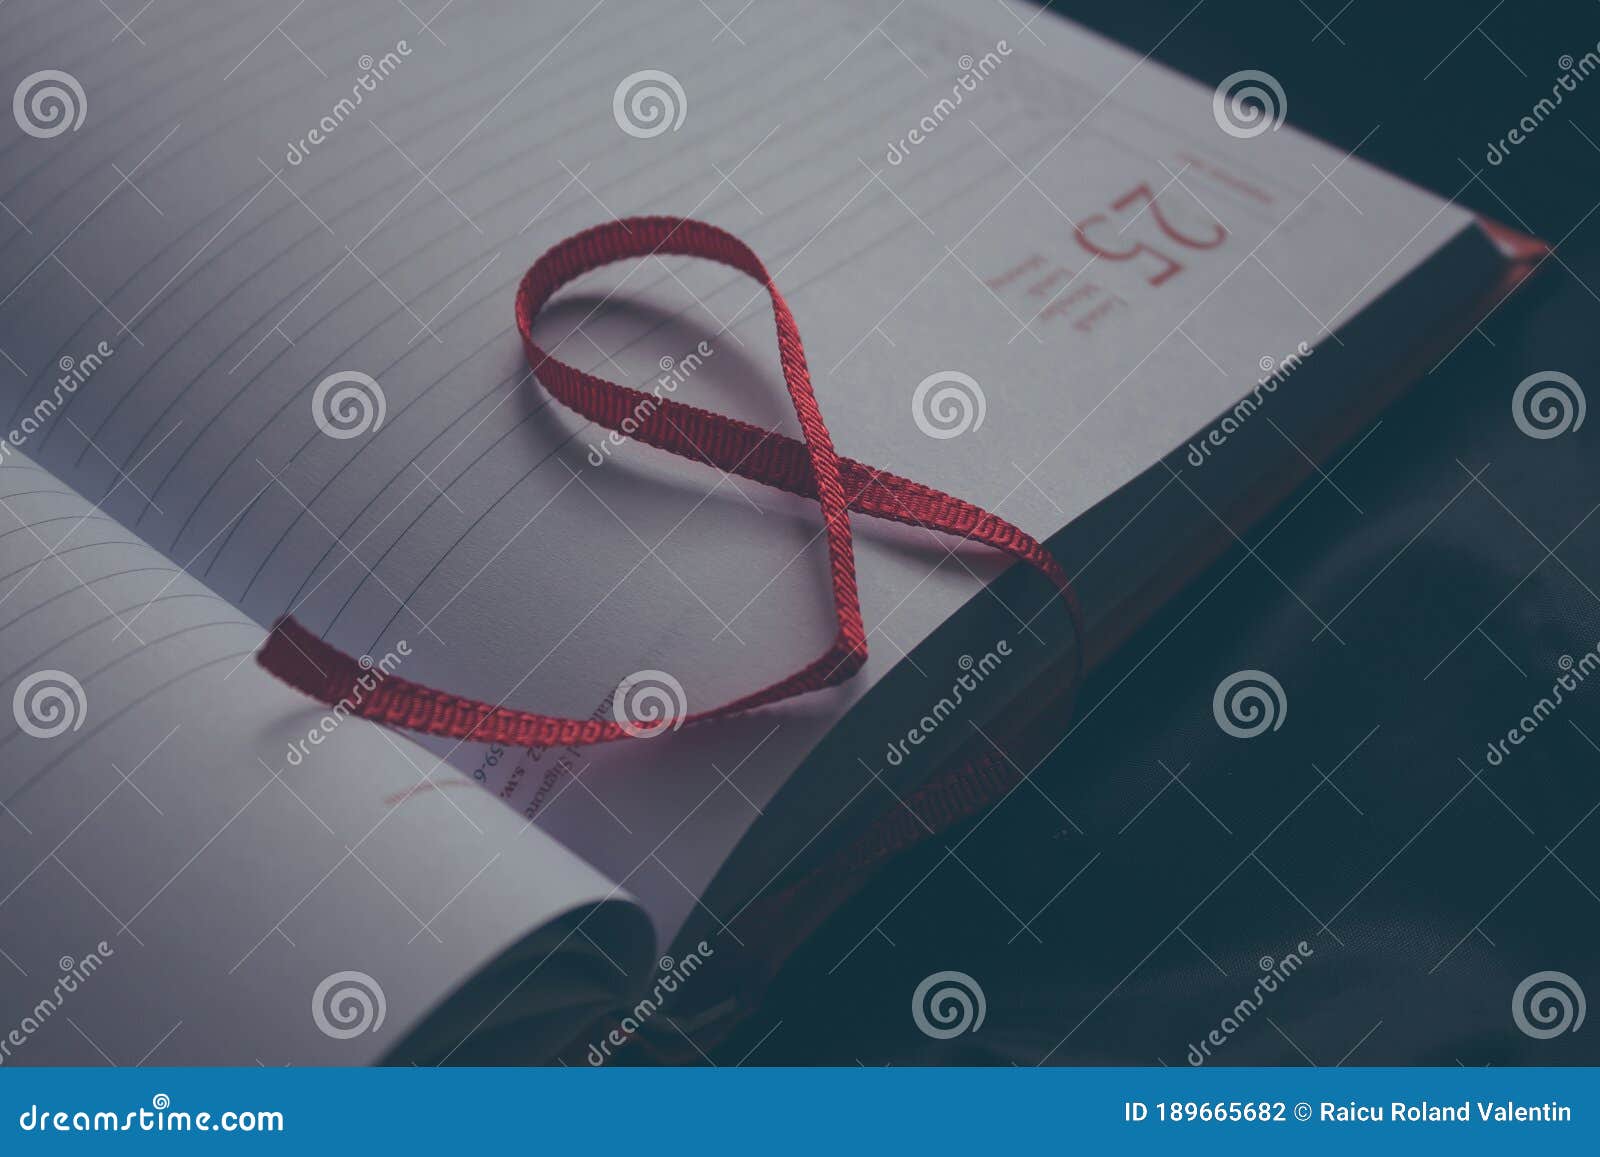 notebook-agenda-business-concept-paper-open-december-red-bookmark-christmas-planning-189665682.jpg